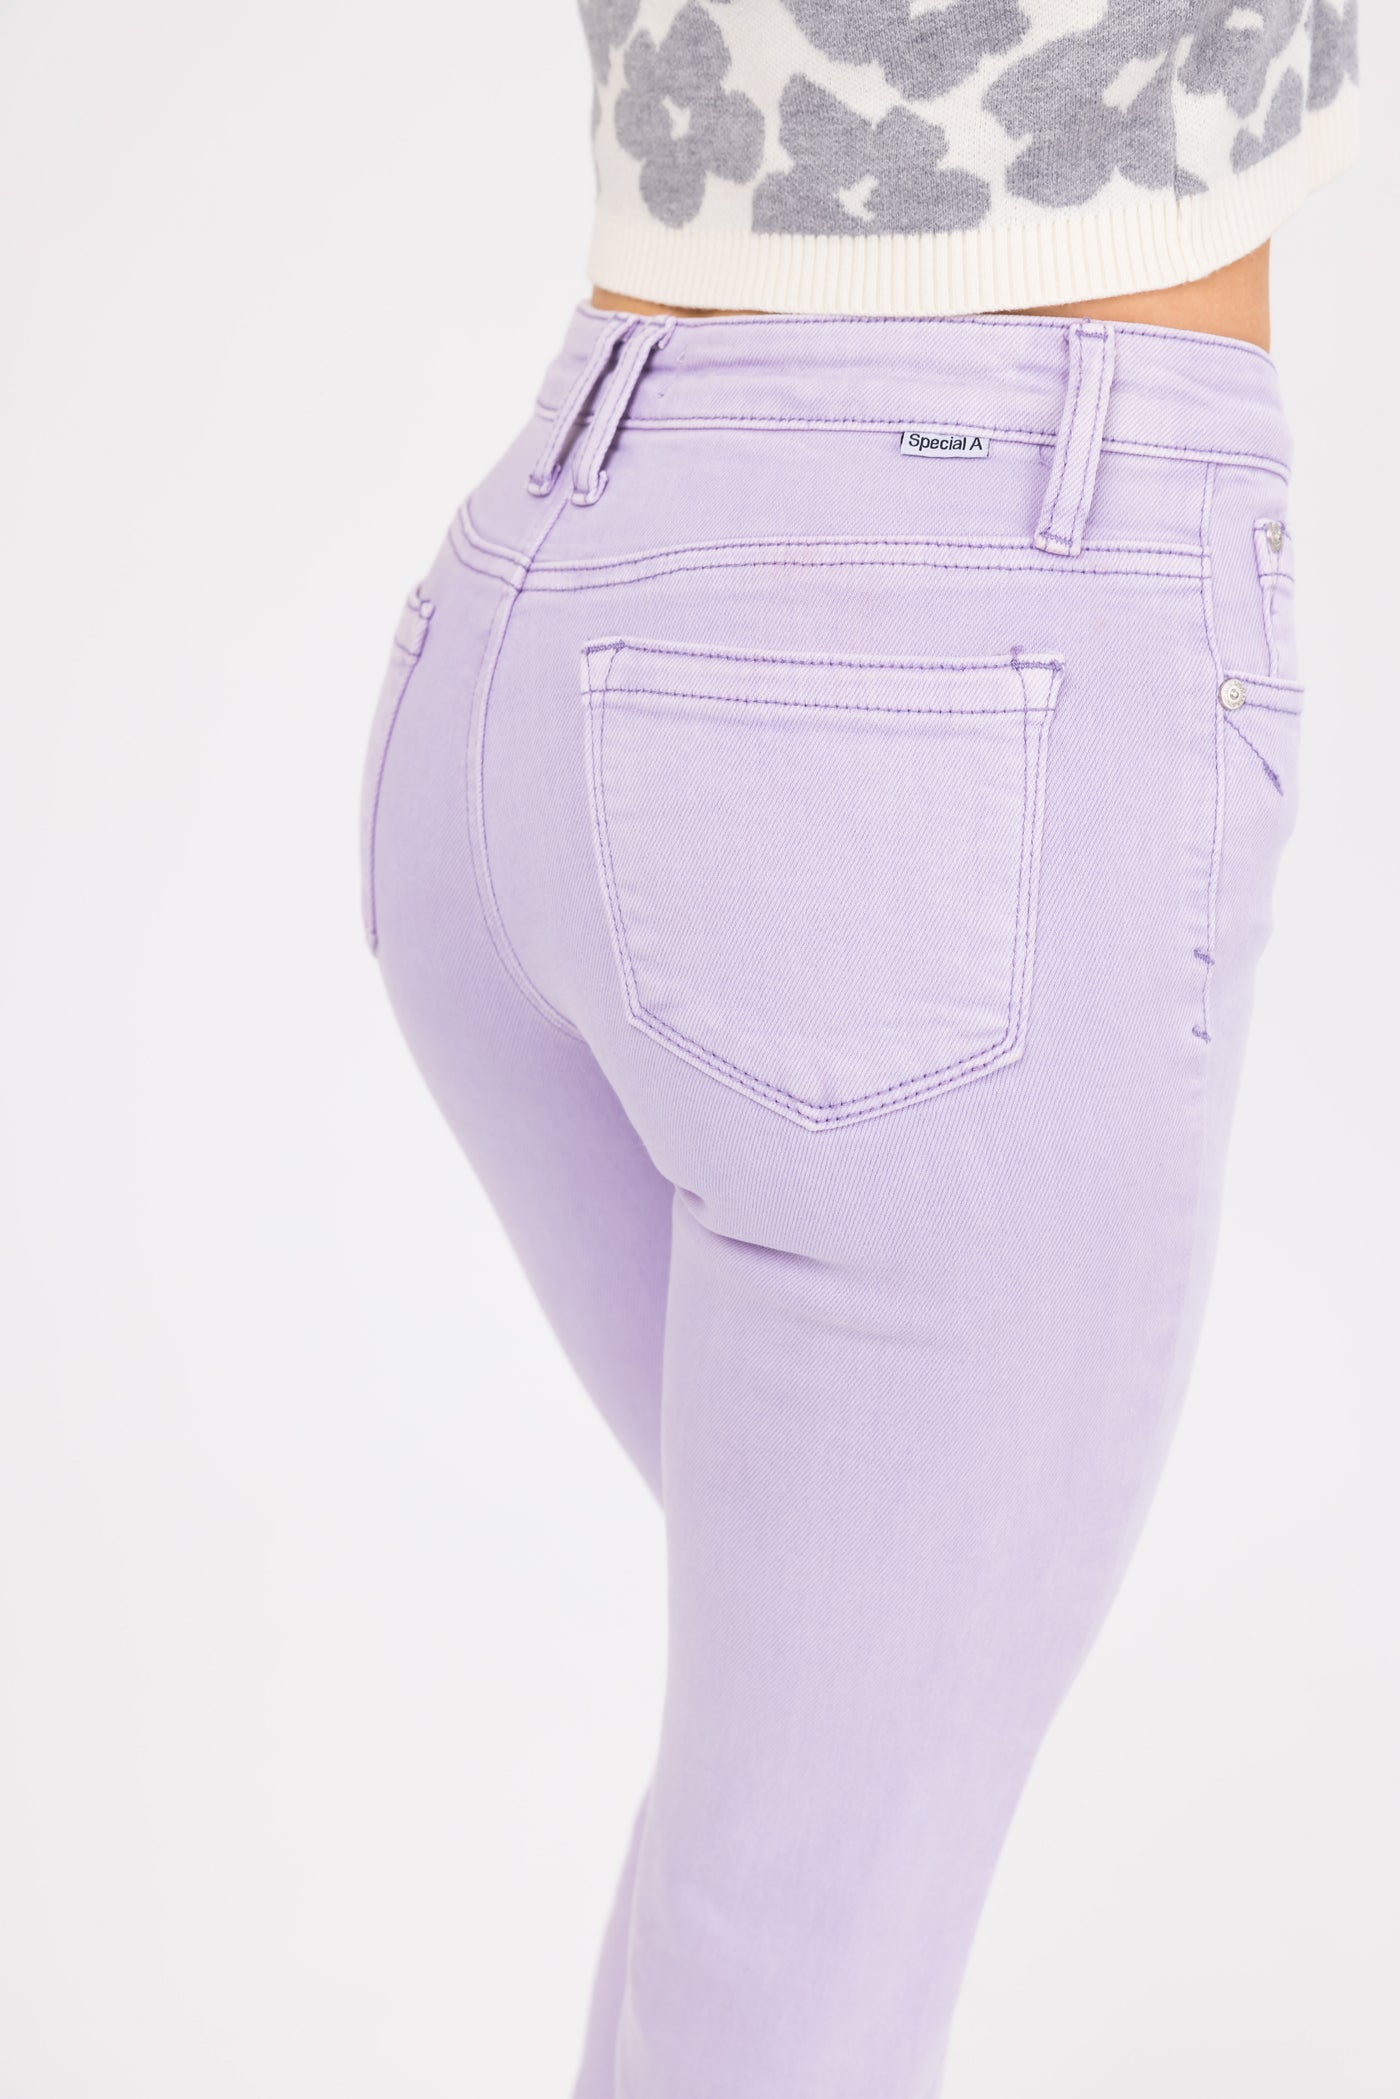 Special A Lavender Slim Bootcut Jeans